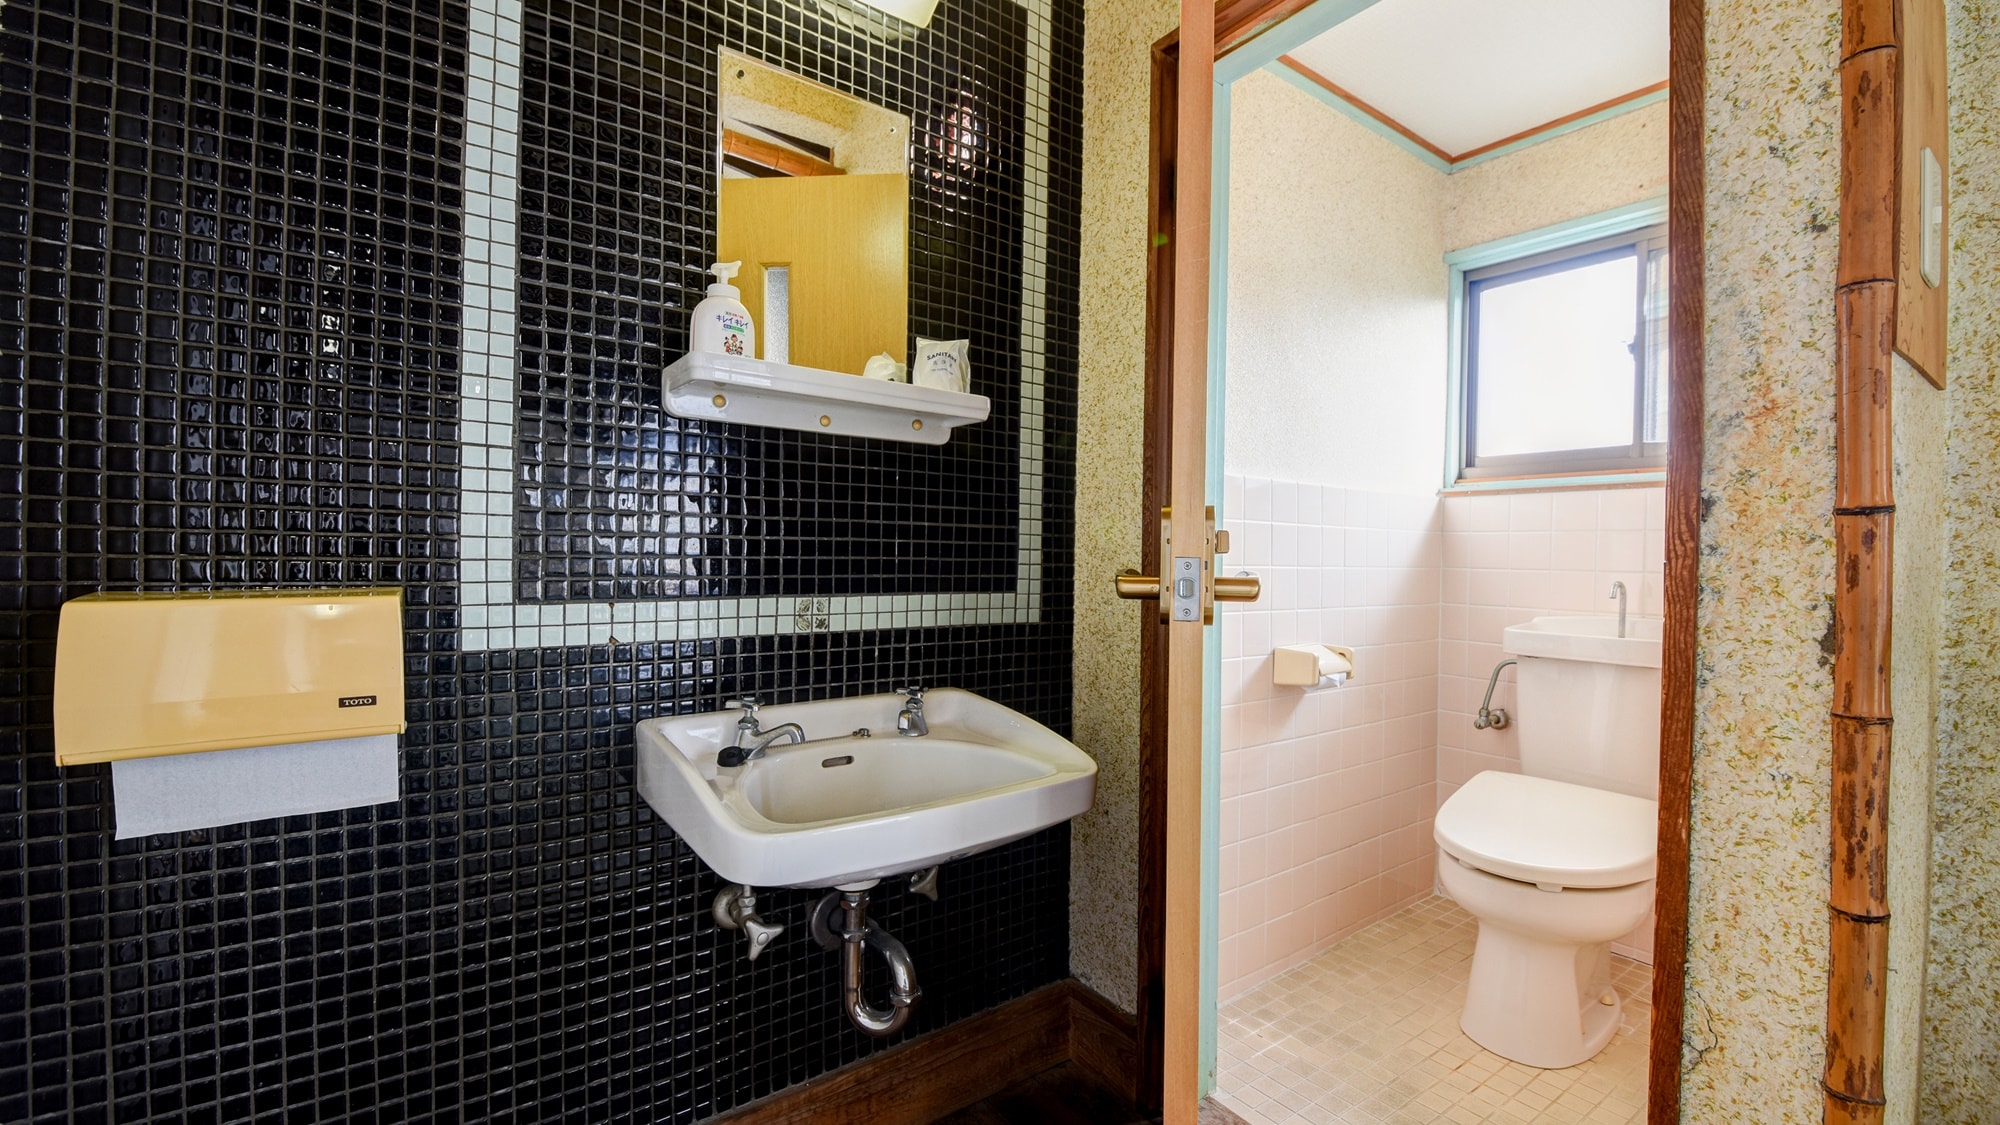 * [Rombongan kamar bergaya Jepang-kamar kecil-] Untuk menghindari ketidaknyamanan, setiap kamar dilengkapi dengan toilet.